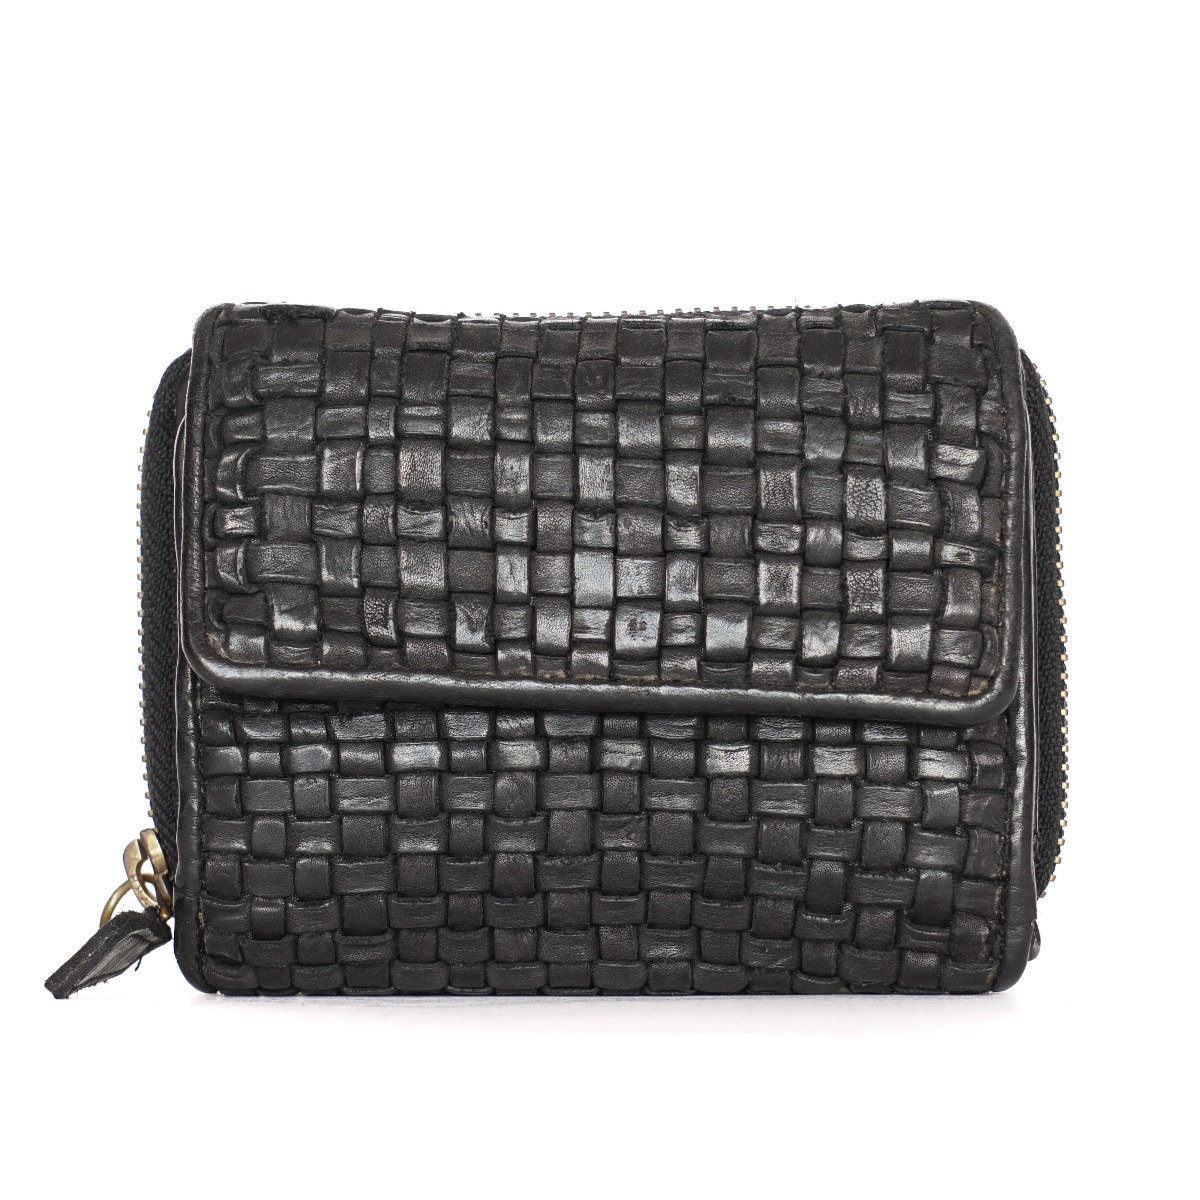 Black vintage woven leather women wallet